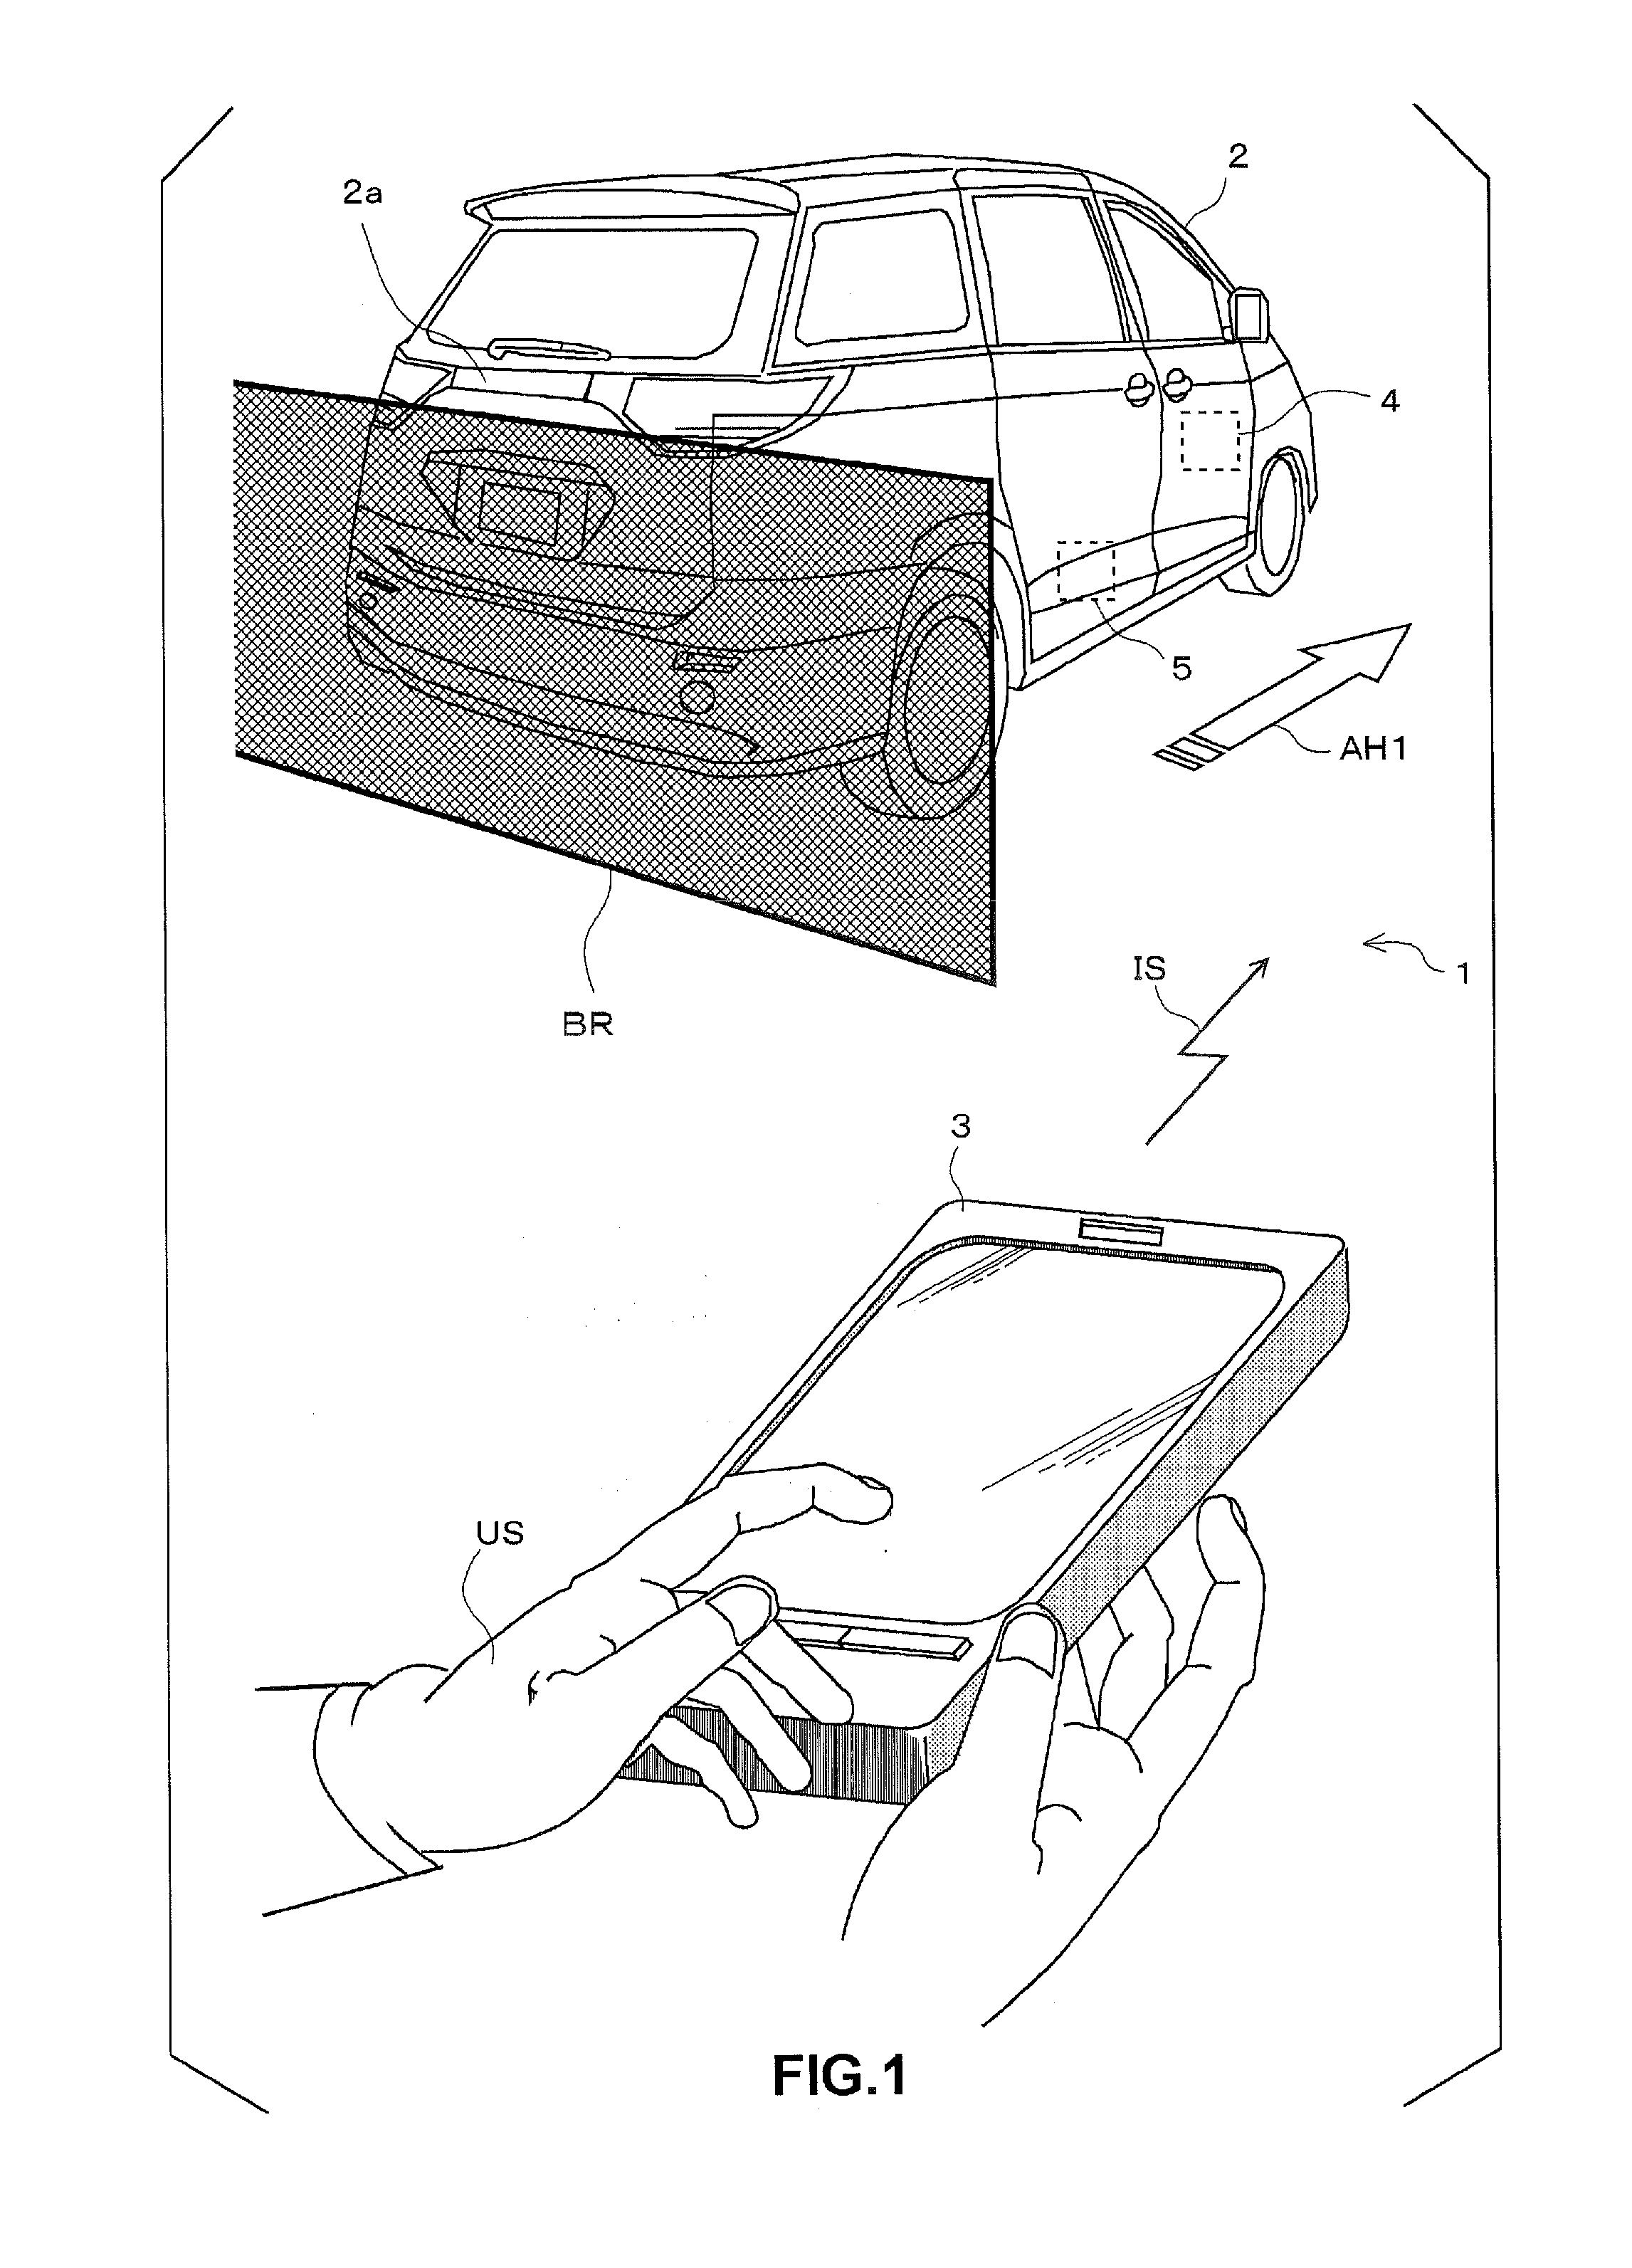 Vehicle apparatus